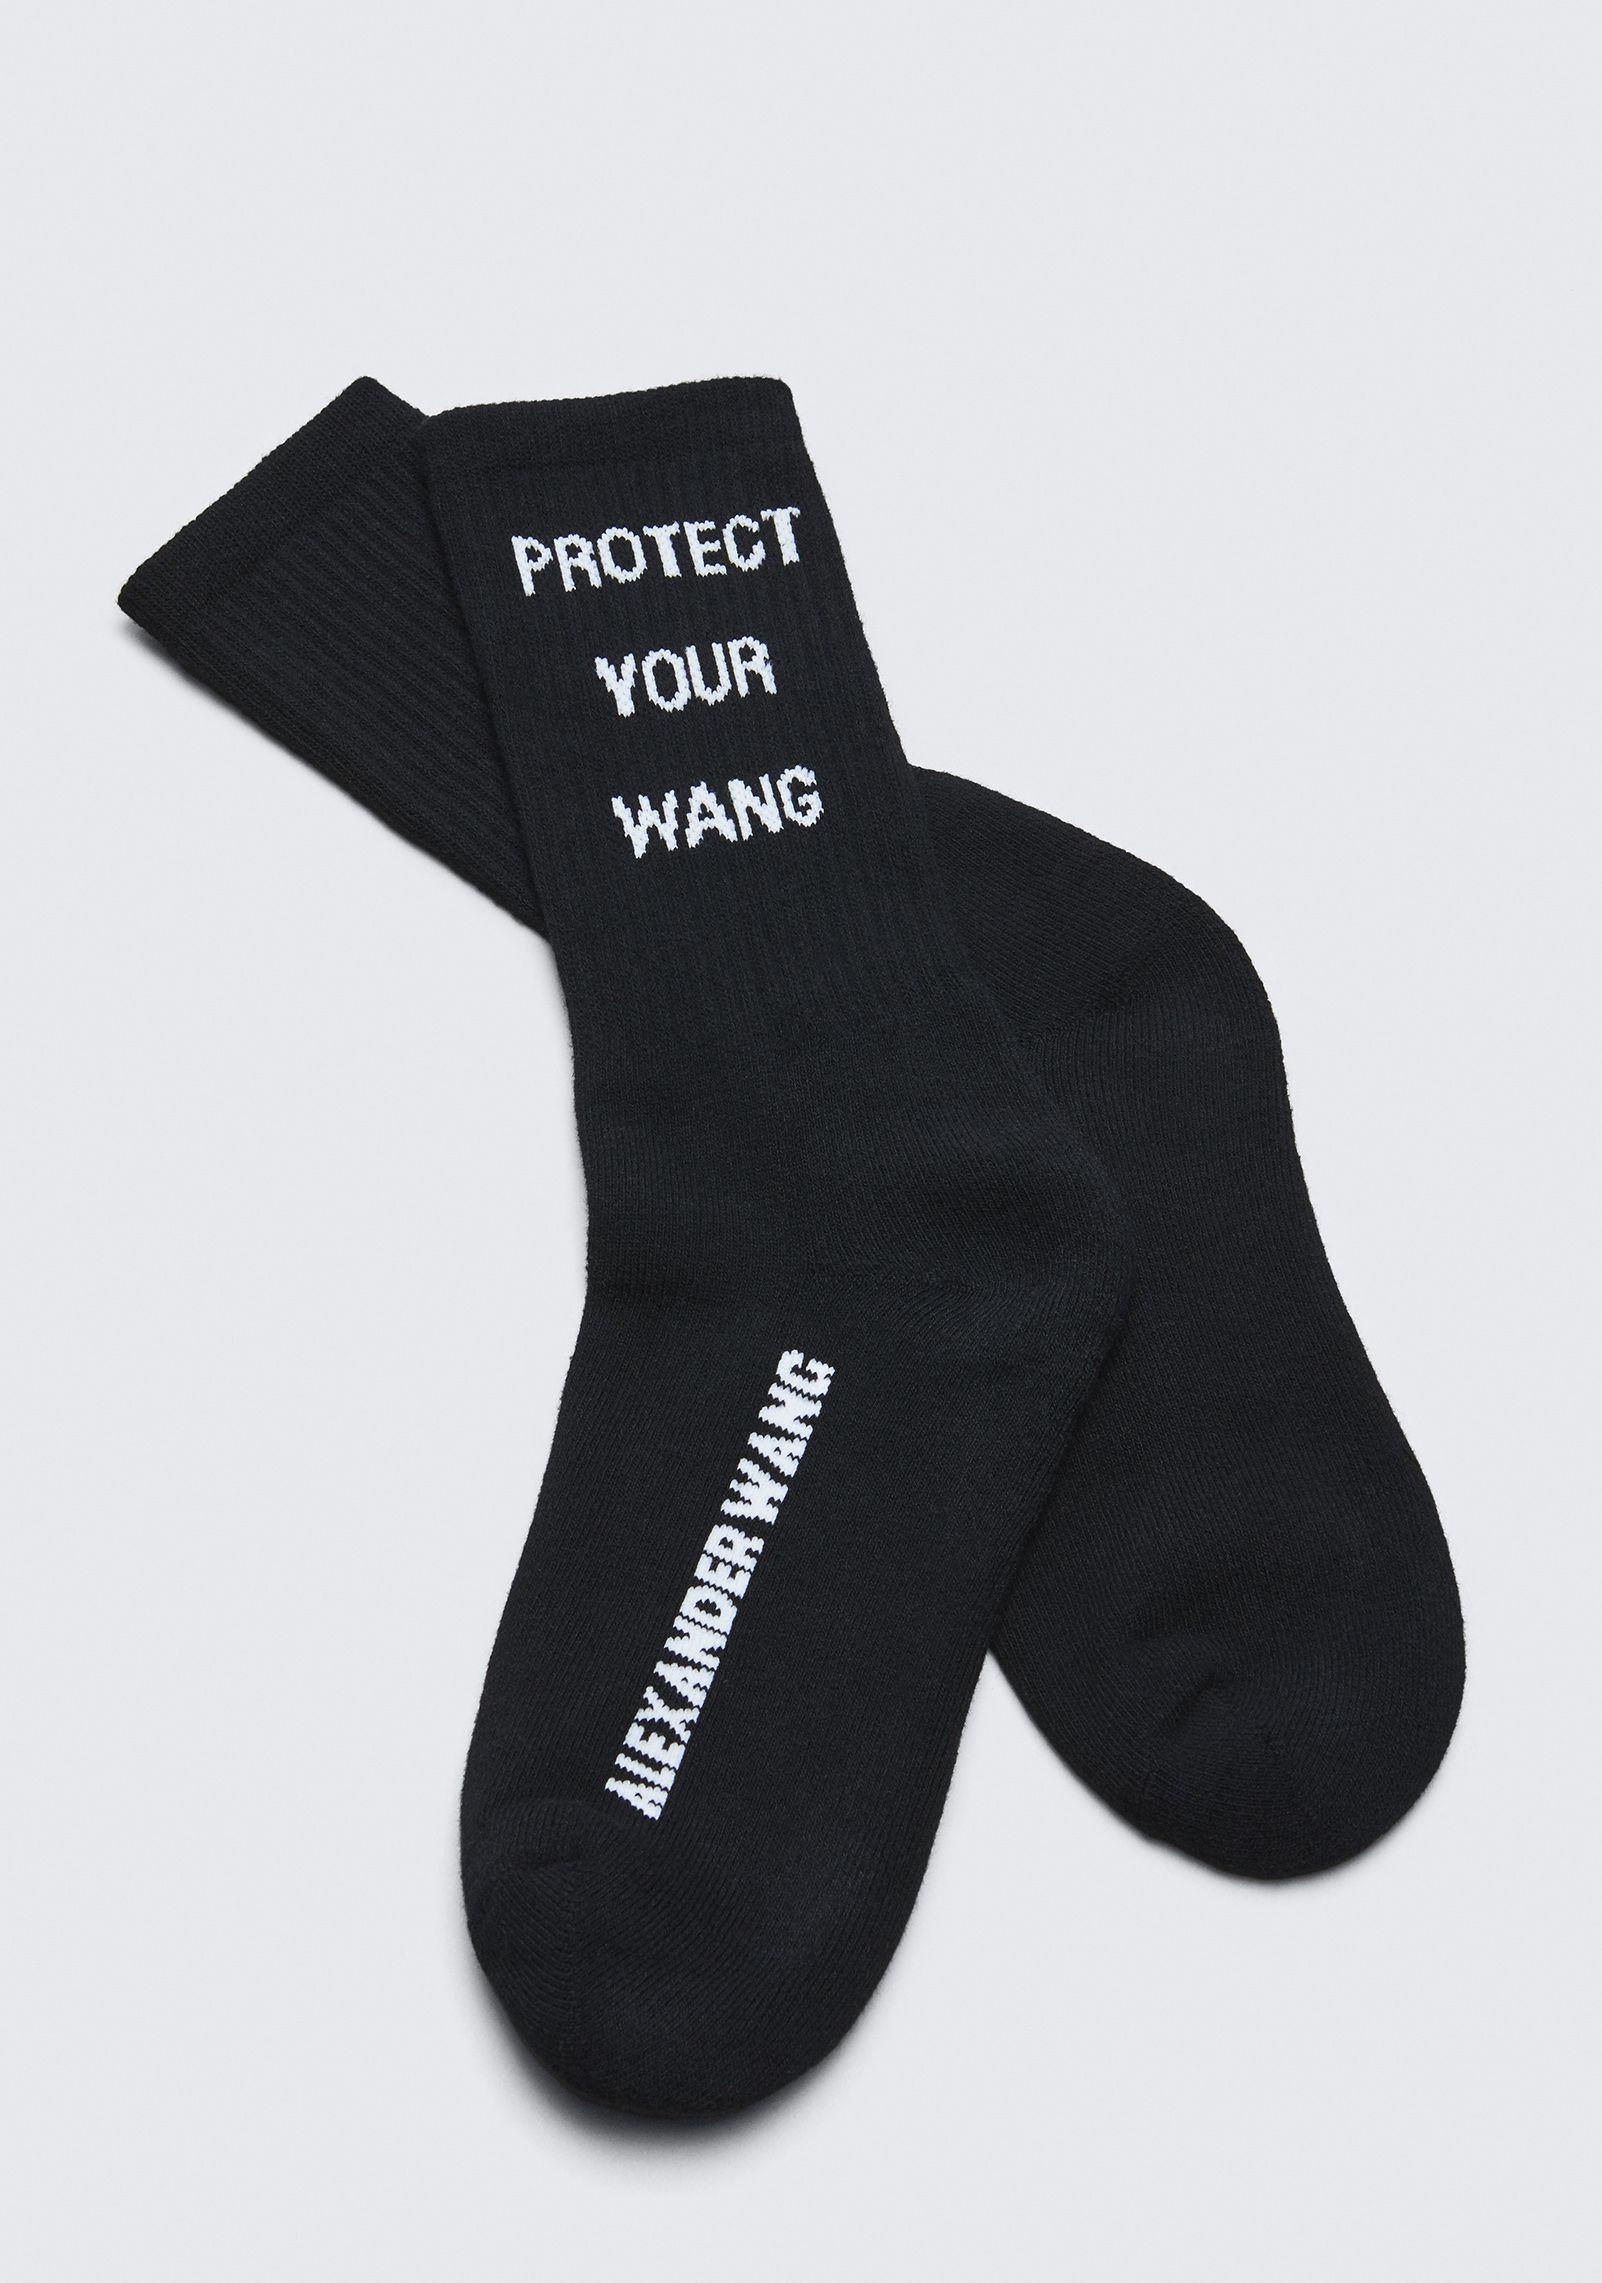 Alexander Wang Cotton X Trojan Protect Your Wang Socks in Black - Lyst